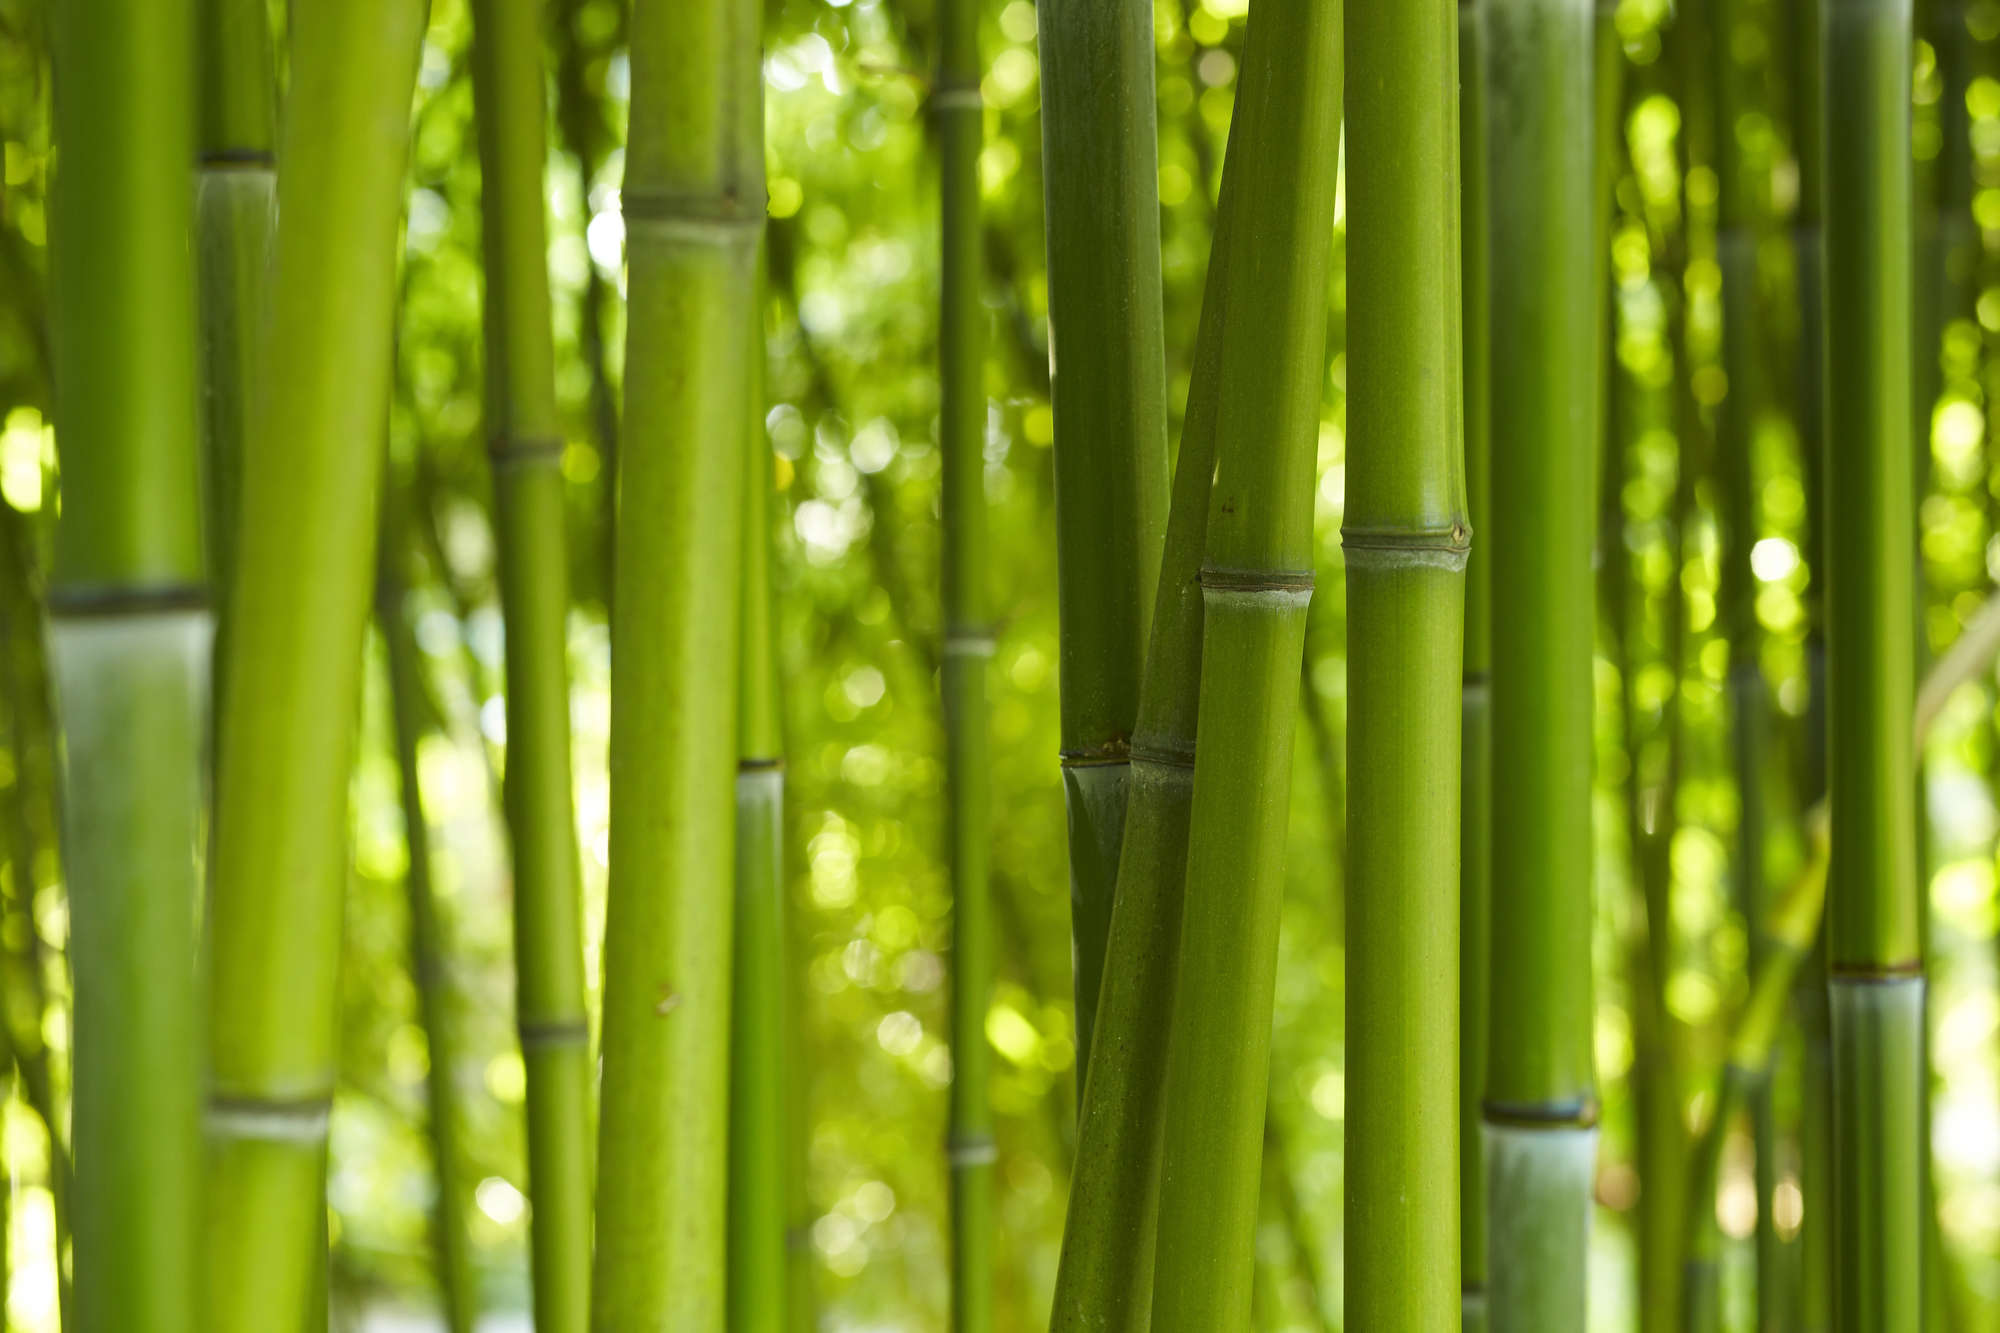             Natuurbehang Bamboe Close-up op mat glad vlies
        